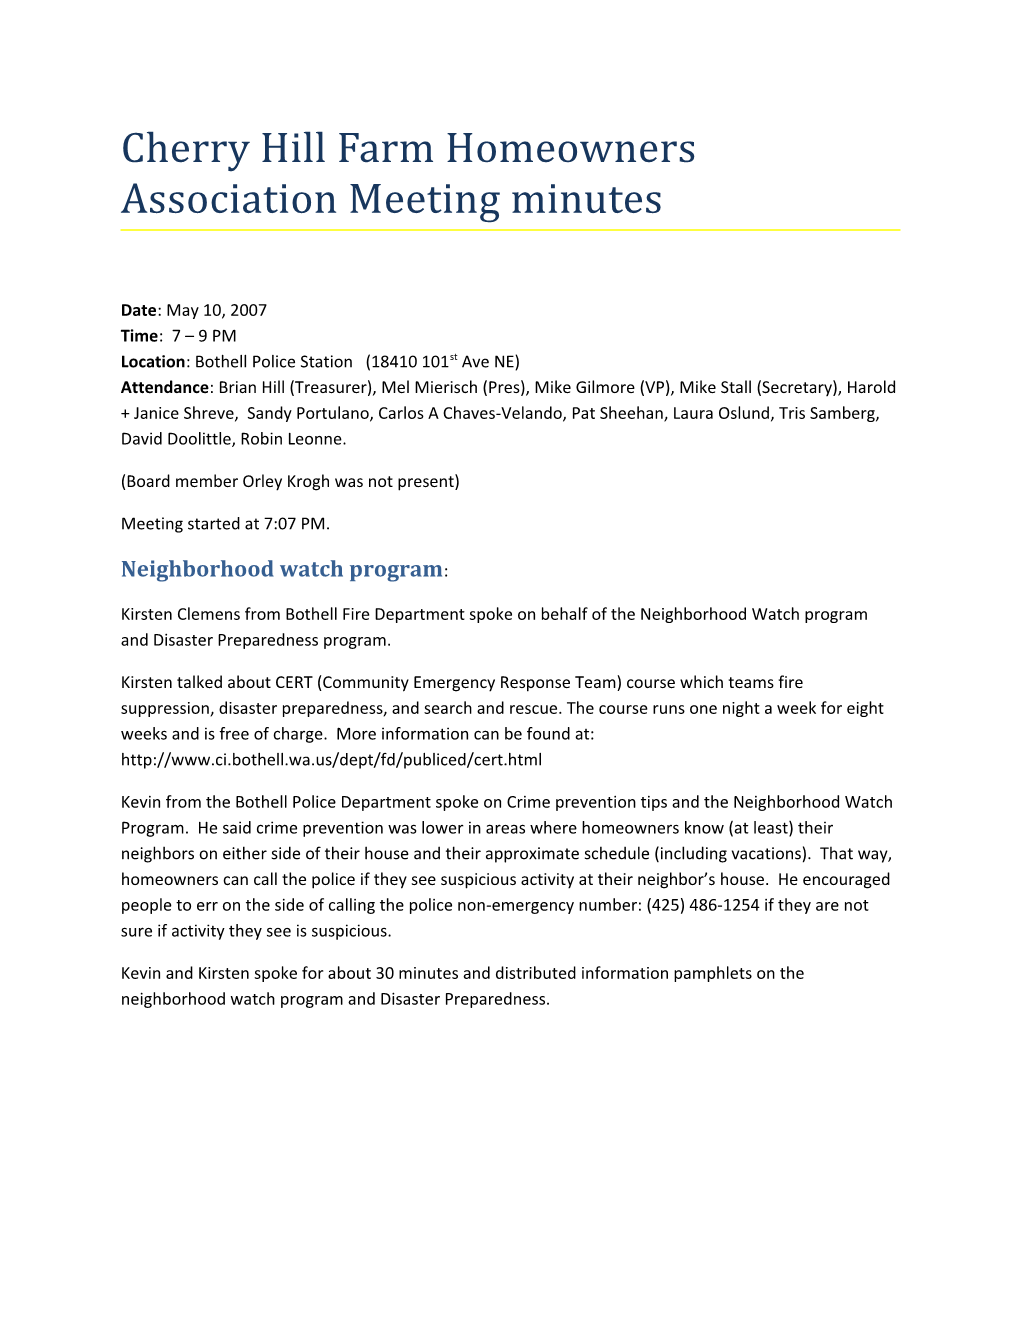 Cherry Hill Farm Homeowners Association Meeting Minutes